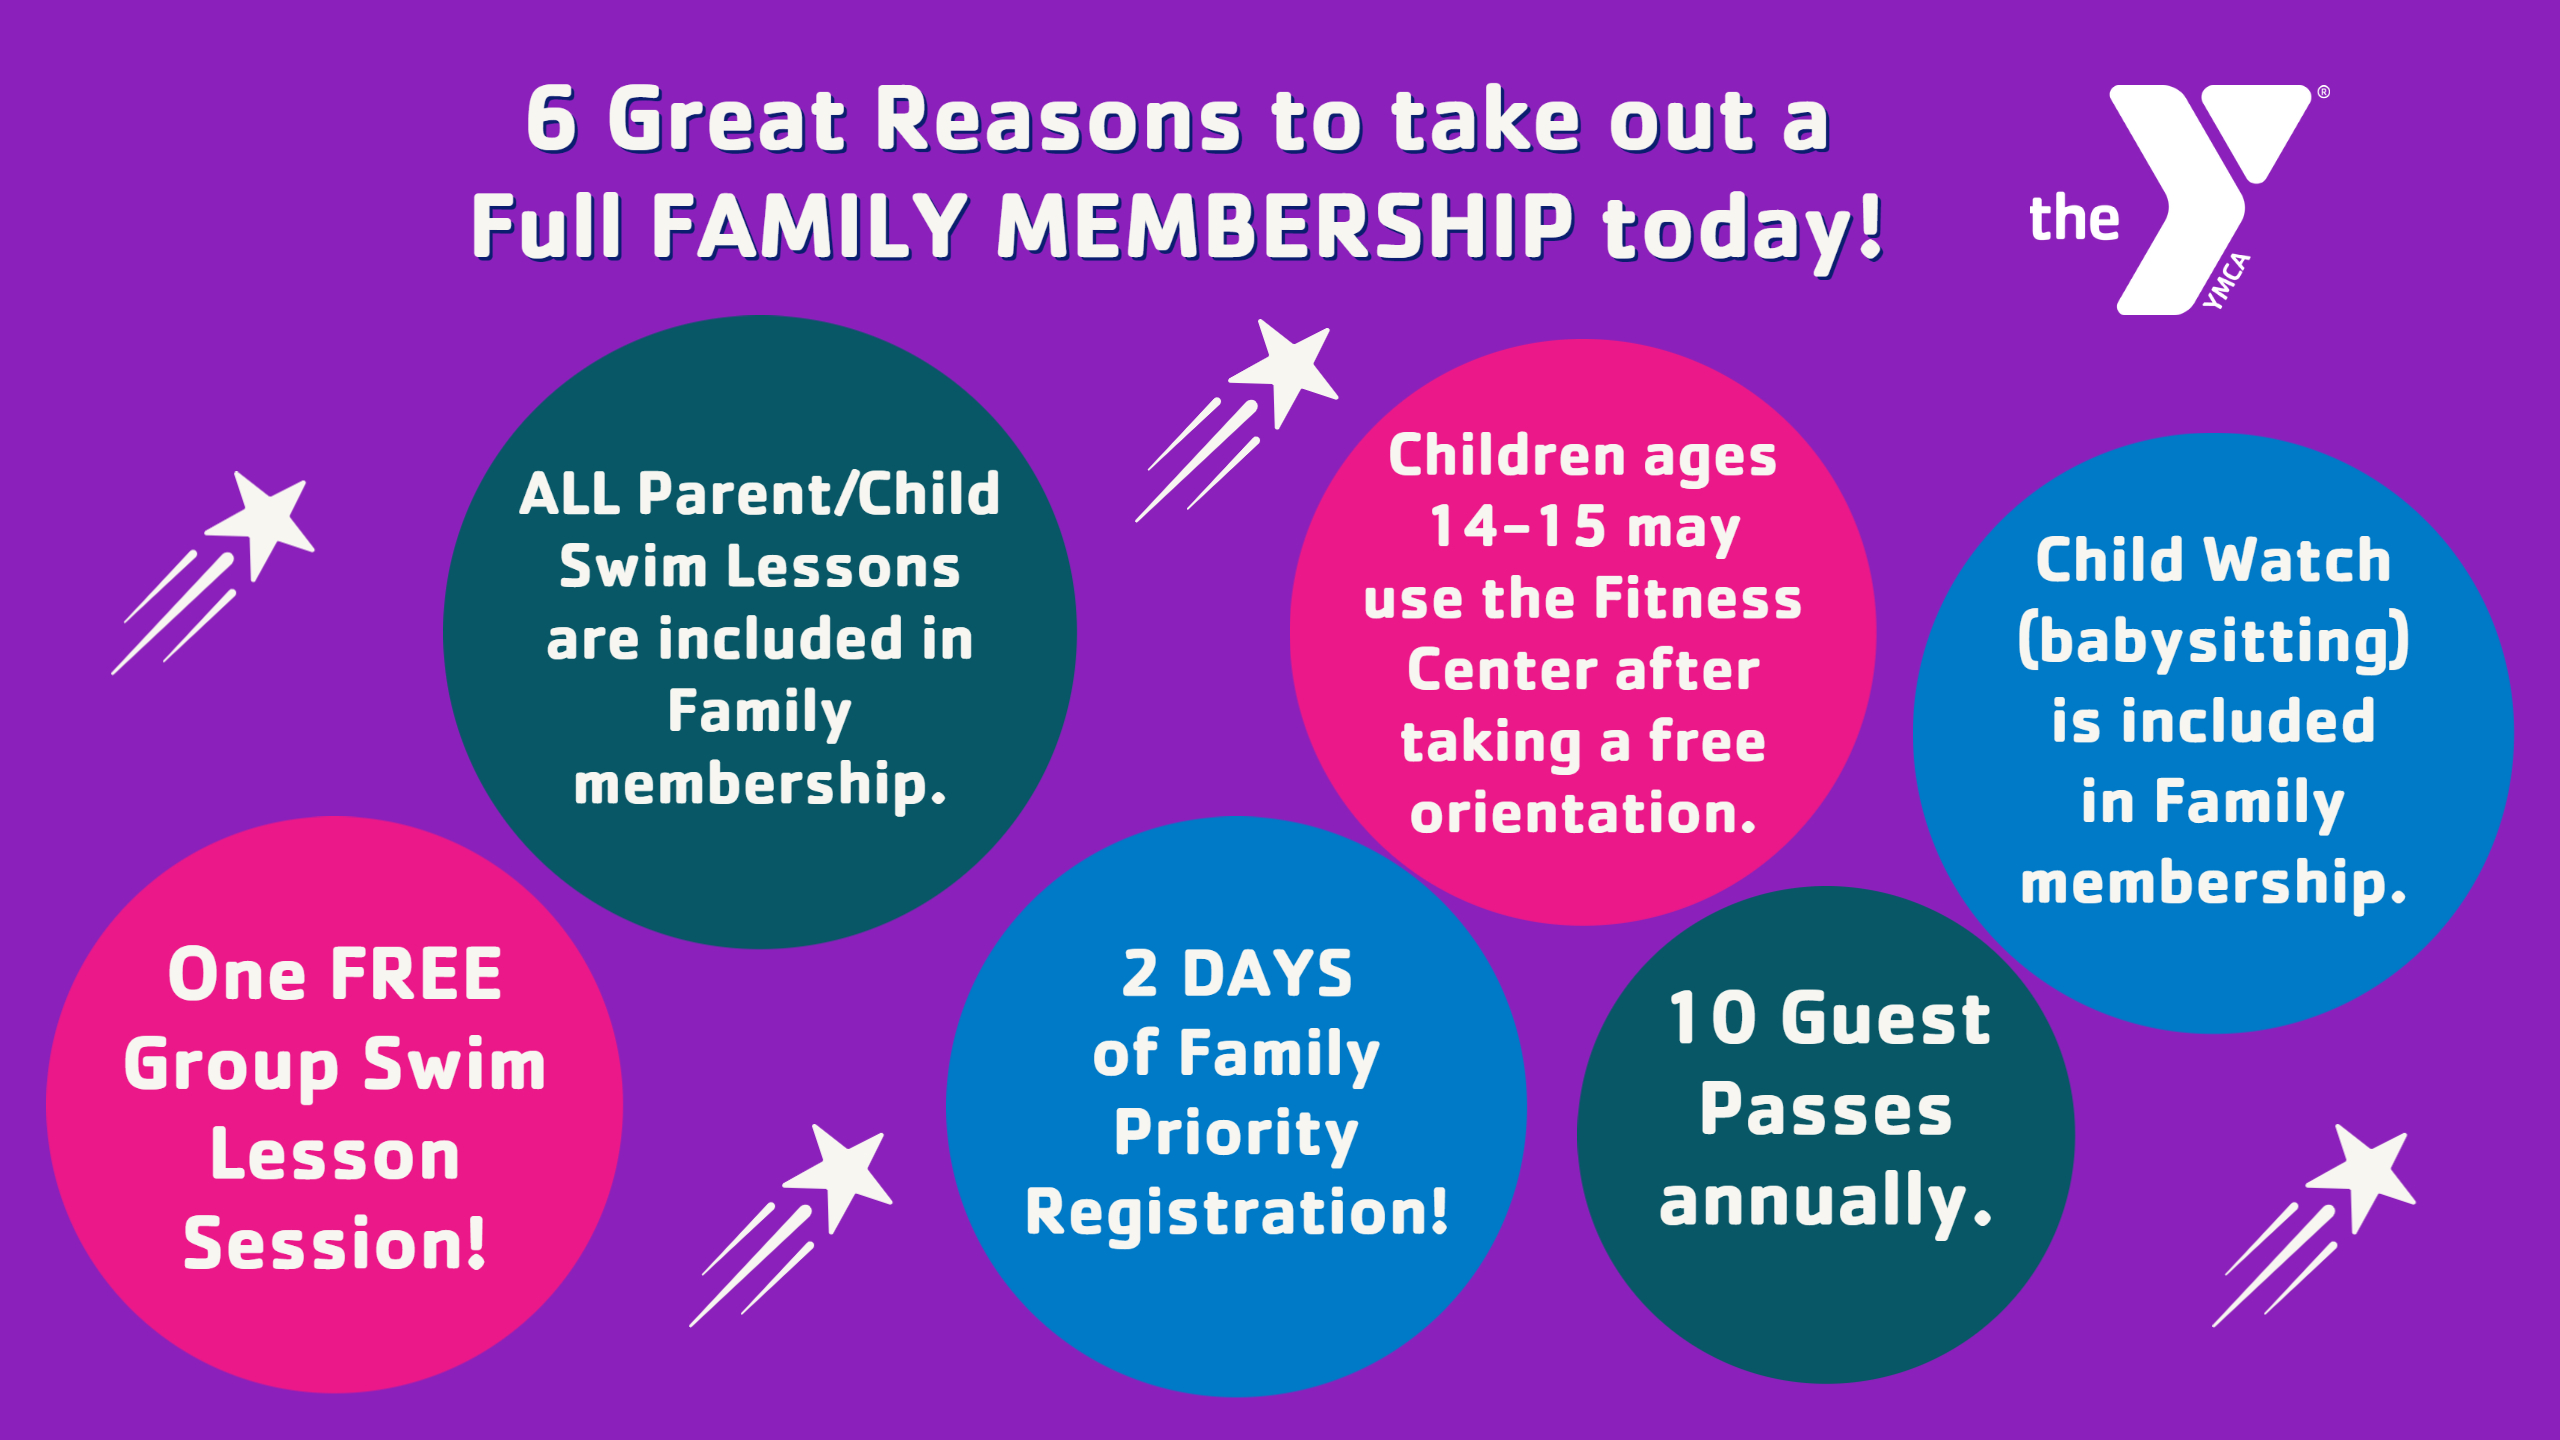 6 reasons for a full family membership